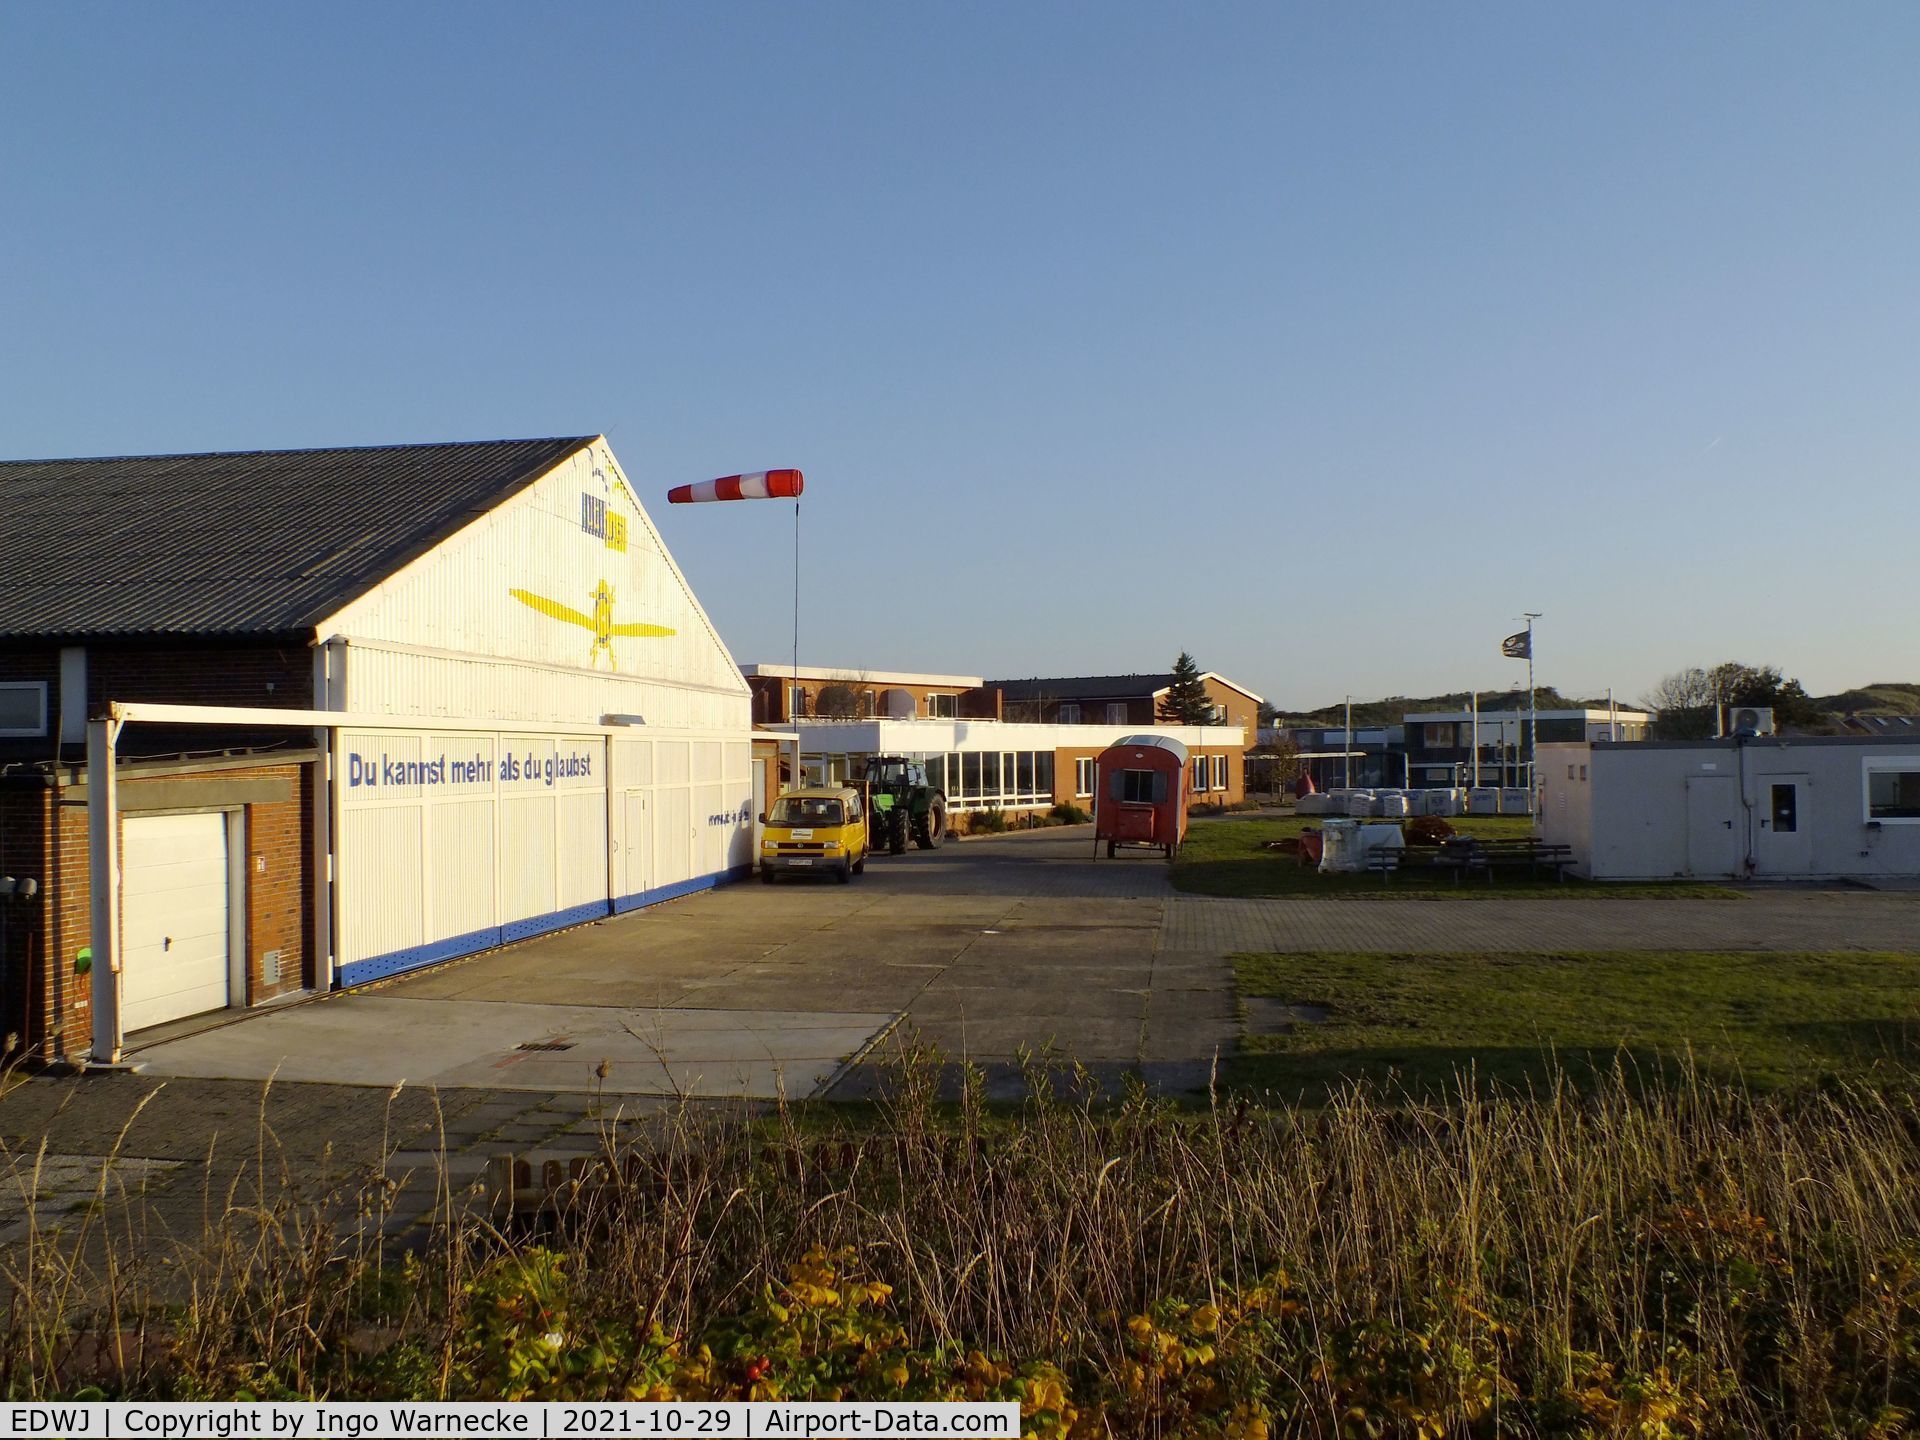 Juist Airport, Juist Germany (EDWJ) - hangar at Juist airfield